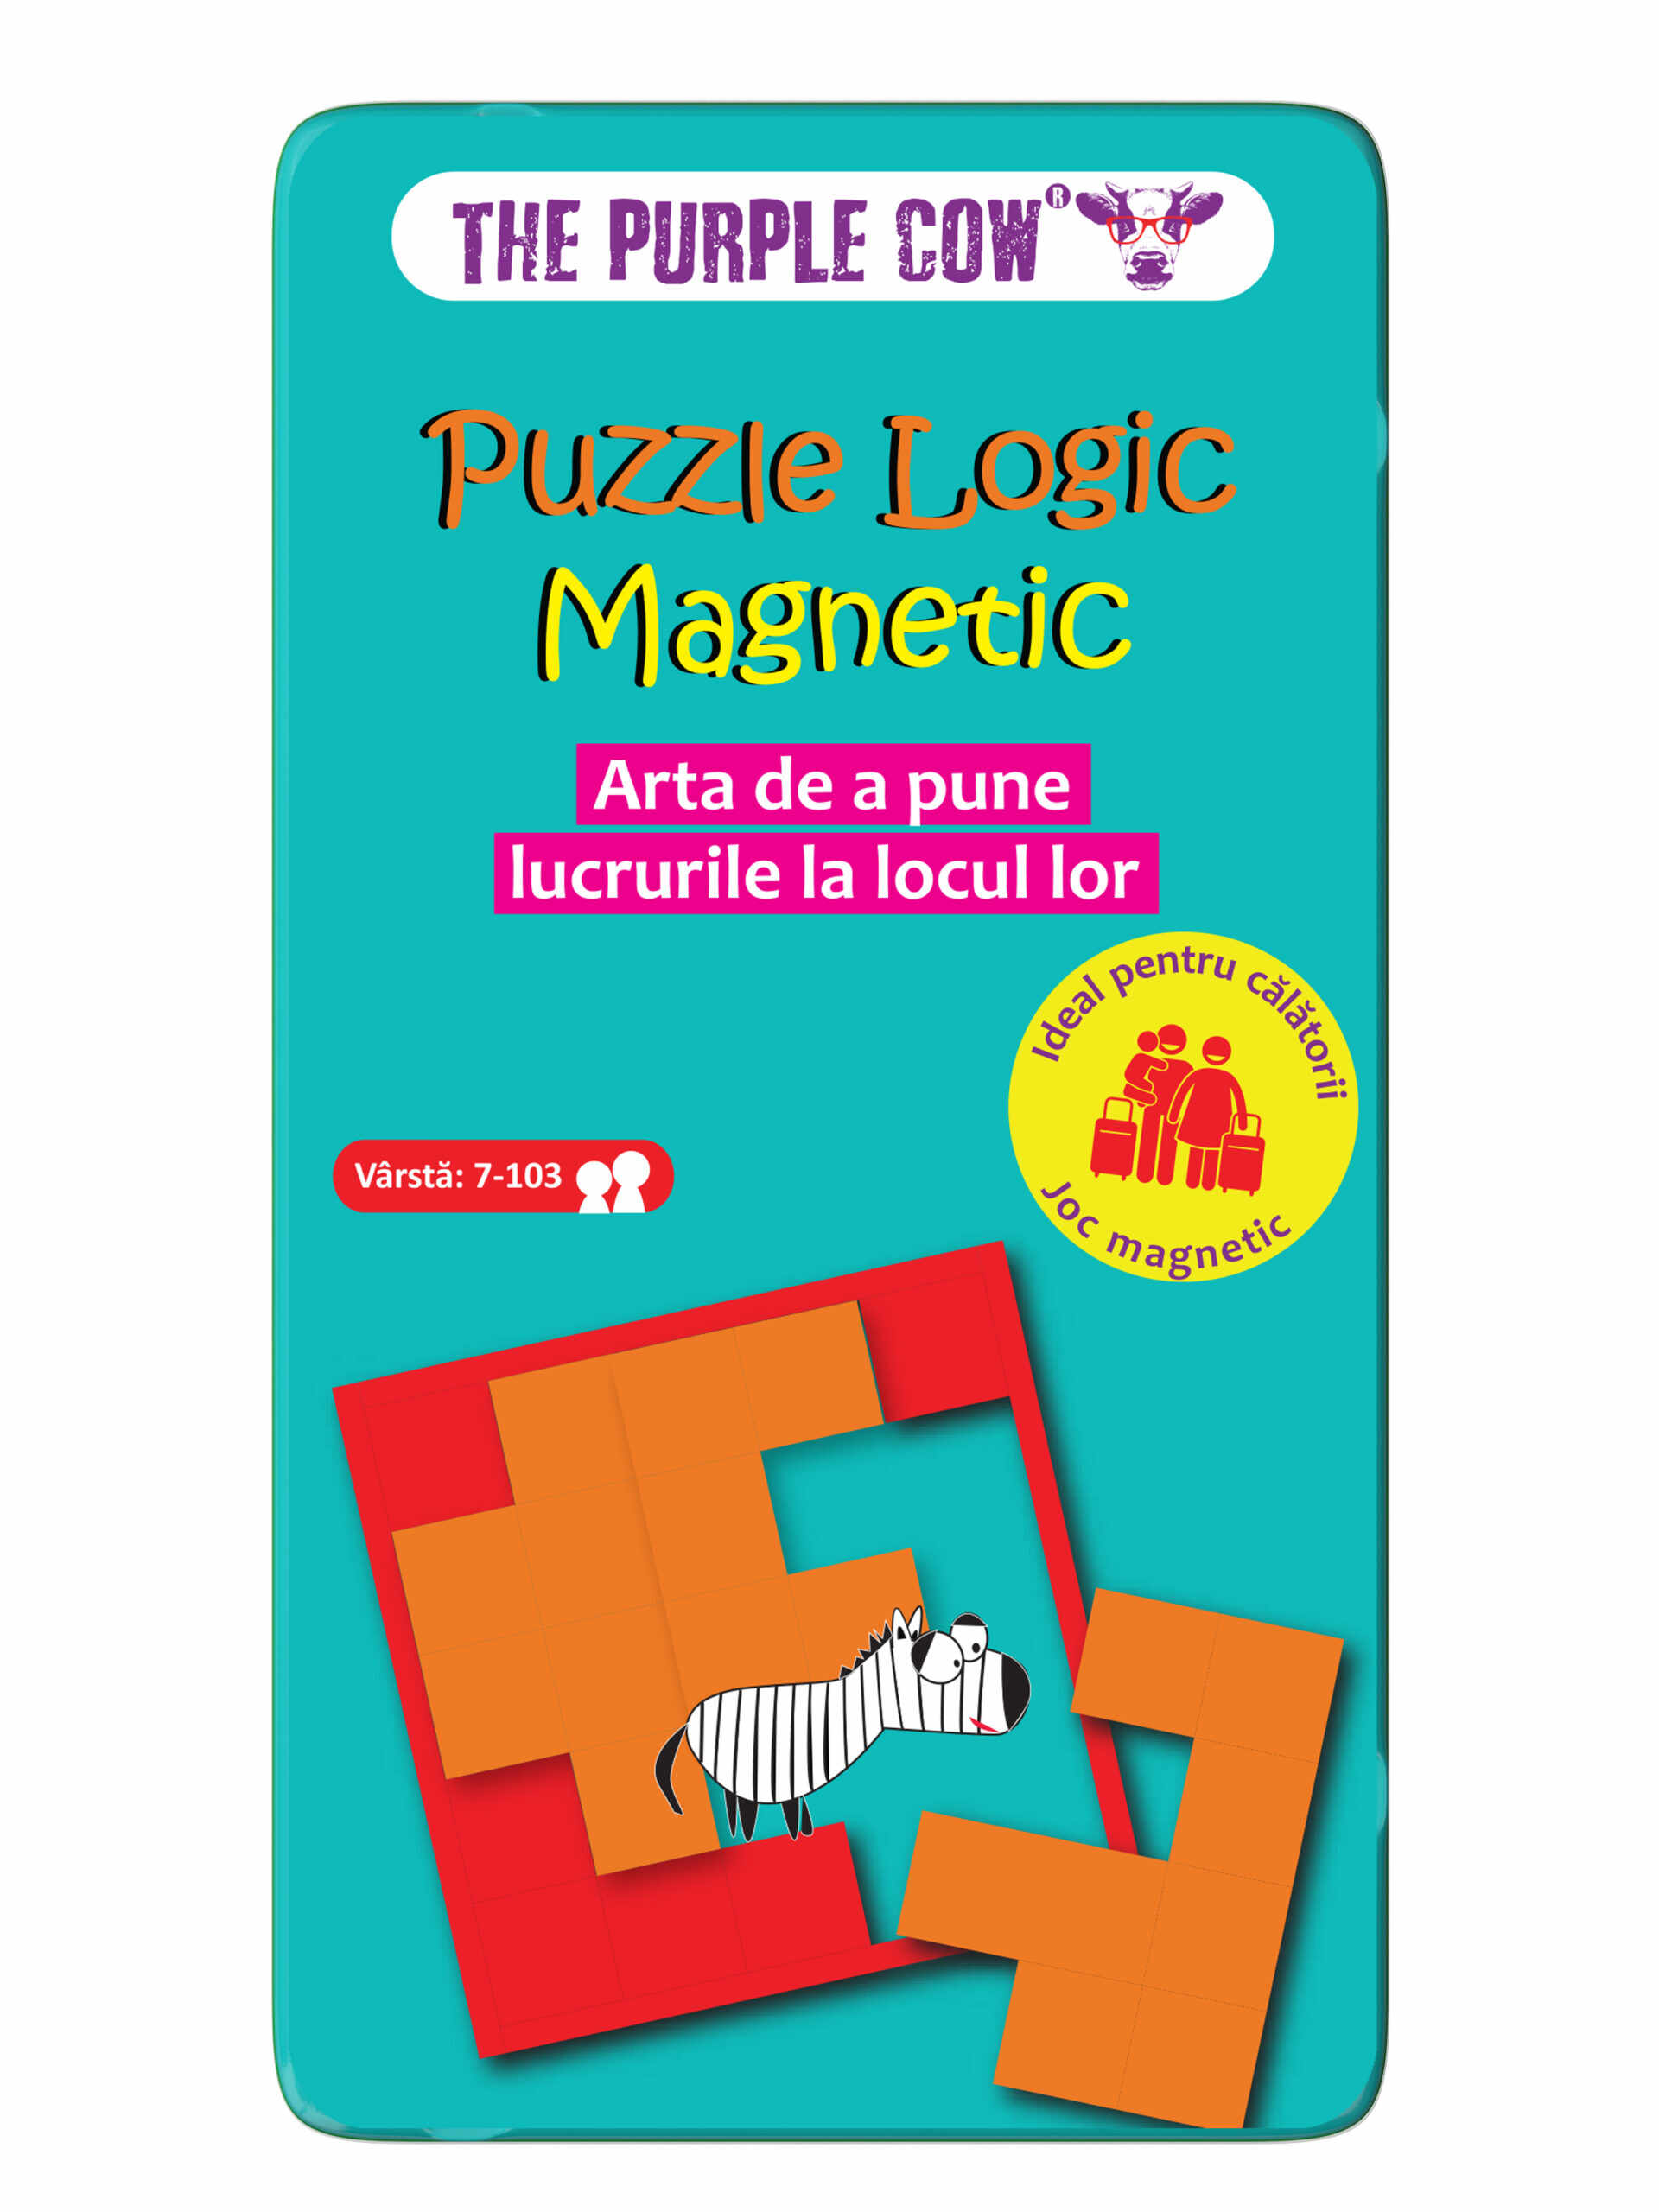 Puzzle logic - Magnetic | The Purple Cow